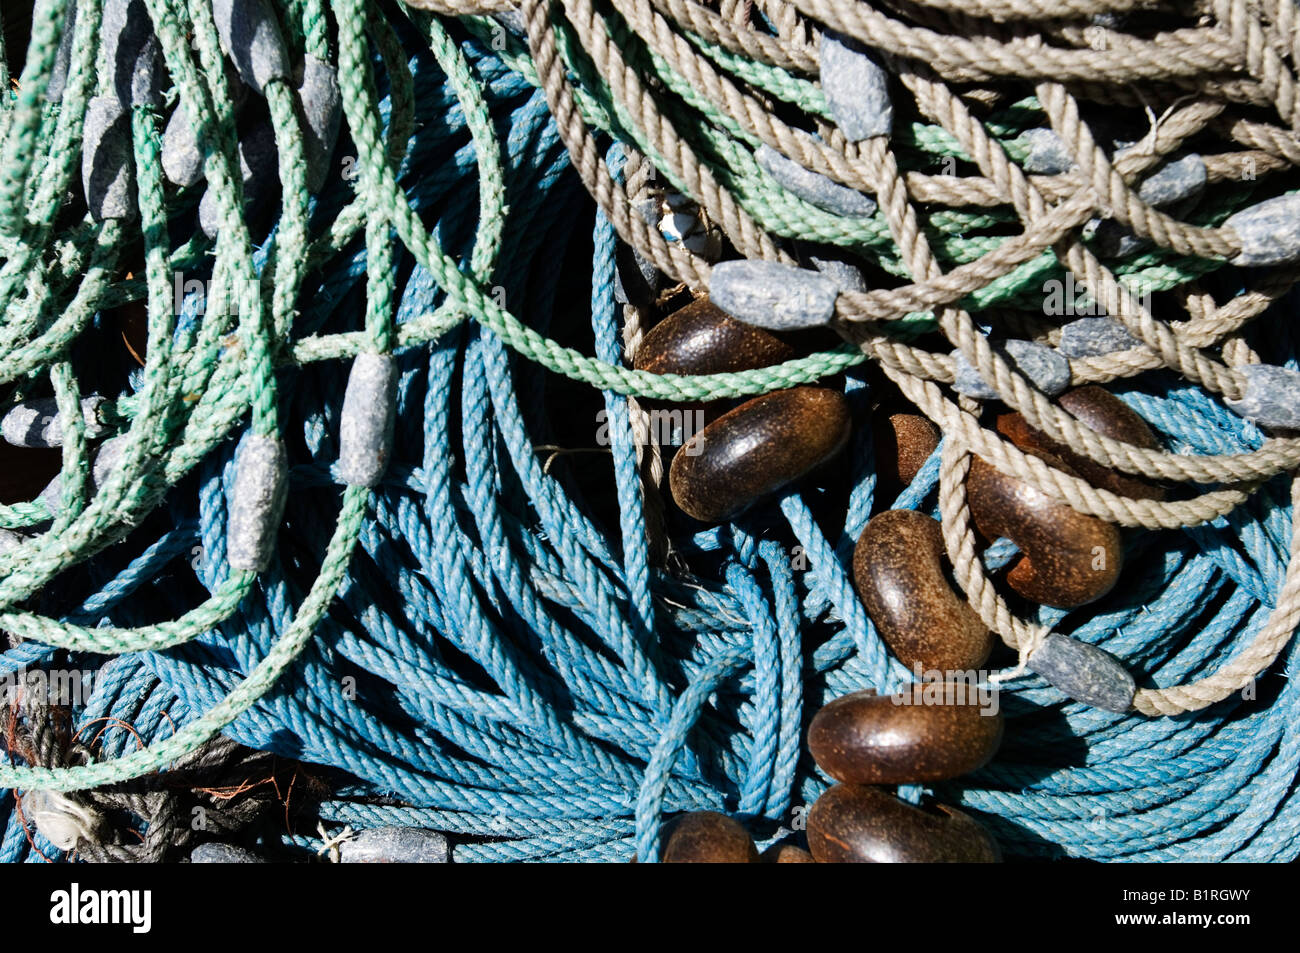 Green and blue fishing ropes, Majorca, Balearic Islands, Spain, Europe Stock Photo